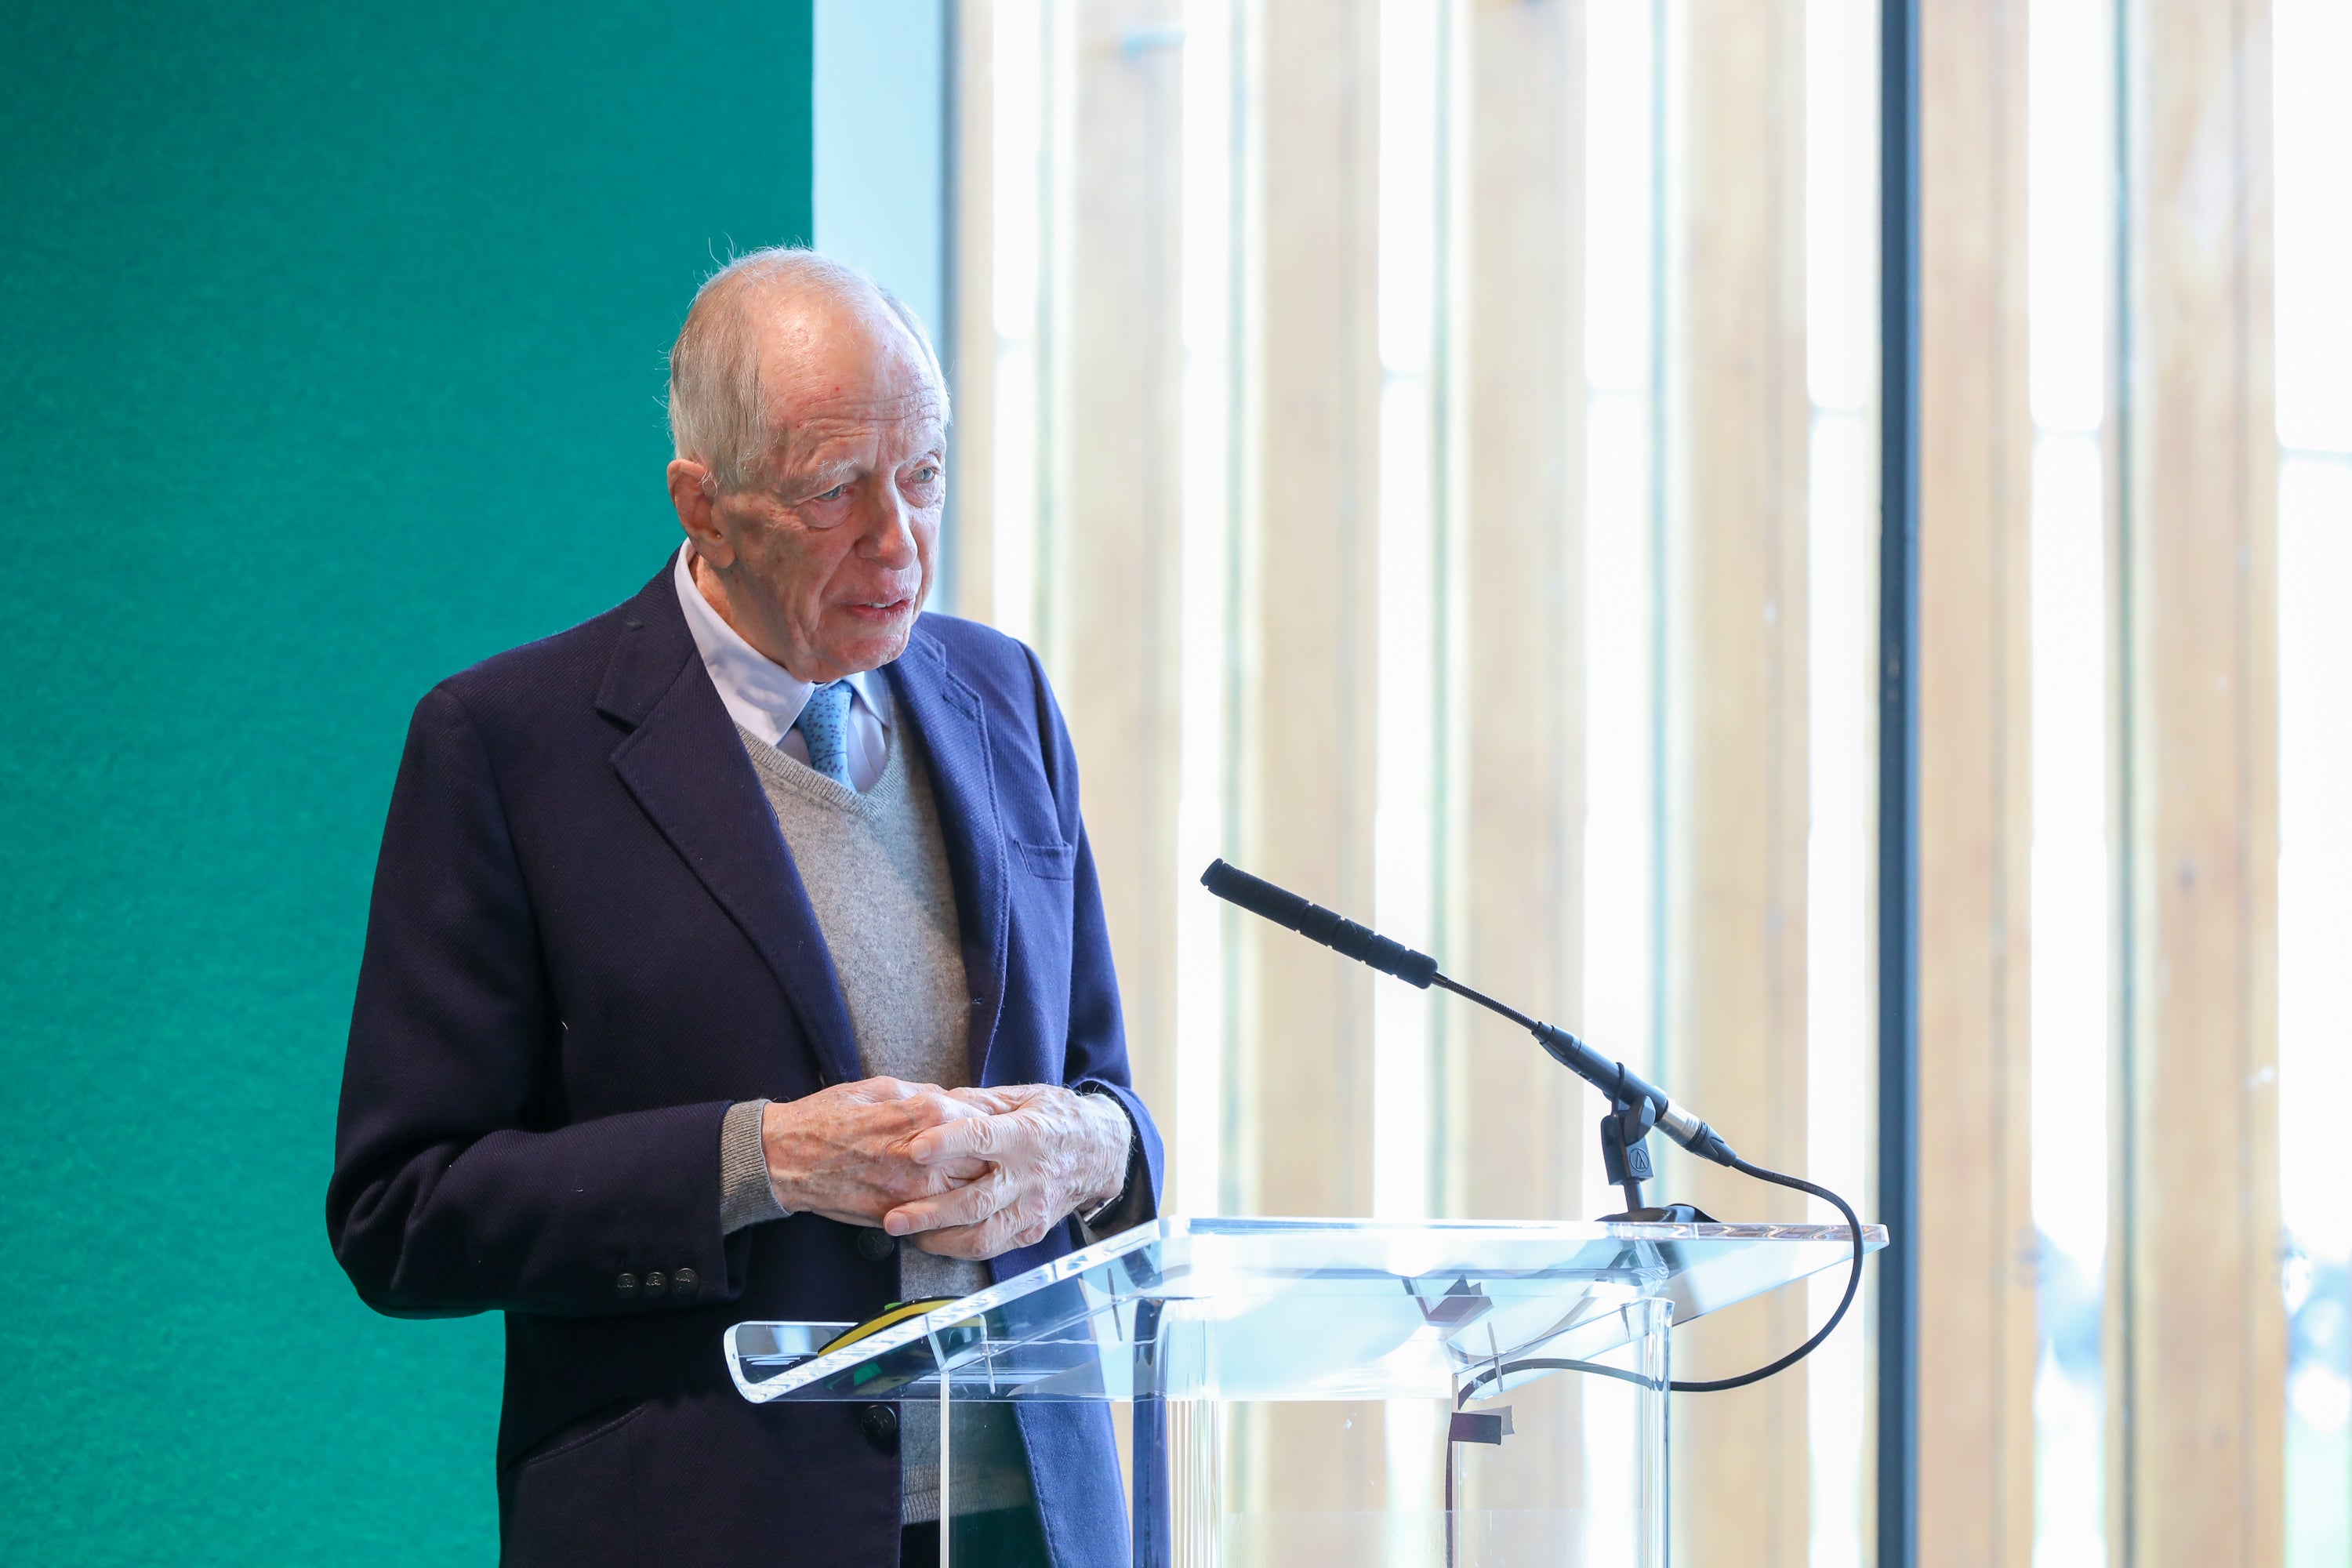 Lord Jacob Rothschild speaks at the Saudi Green Initiative London summit at Waddesdon Manor